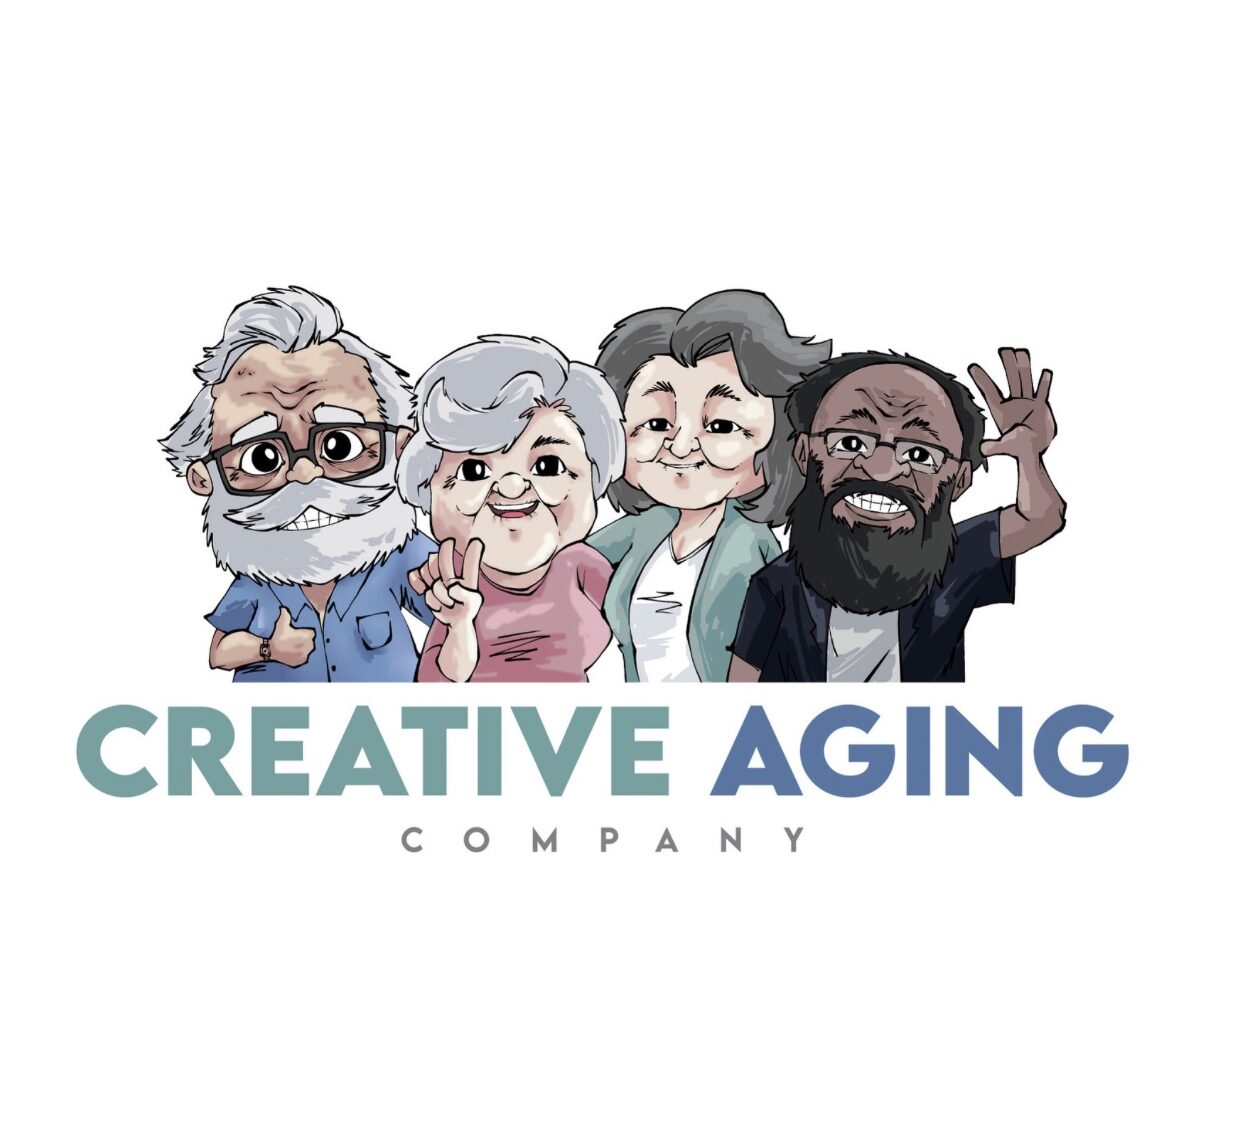 Creative Aging Company